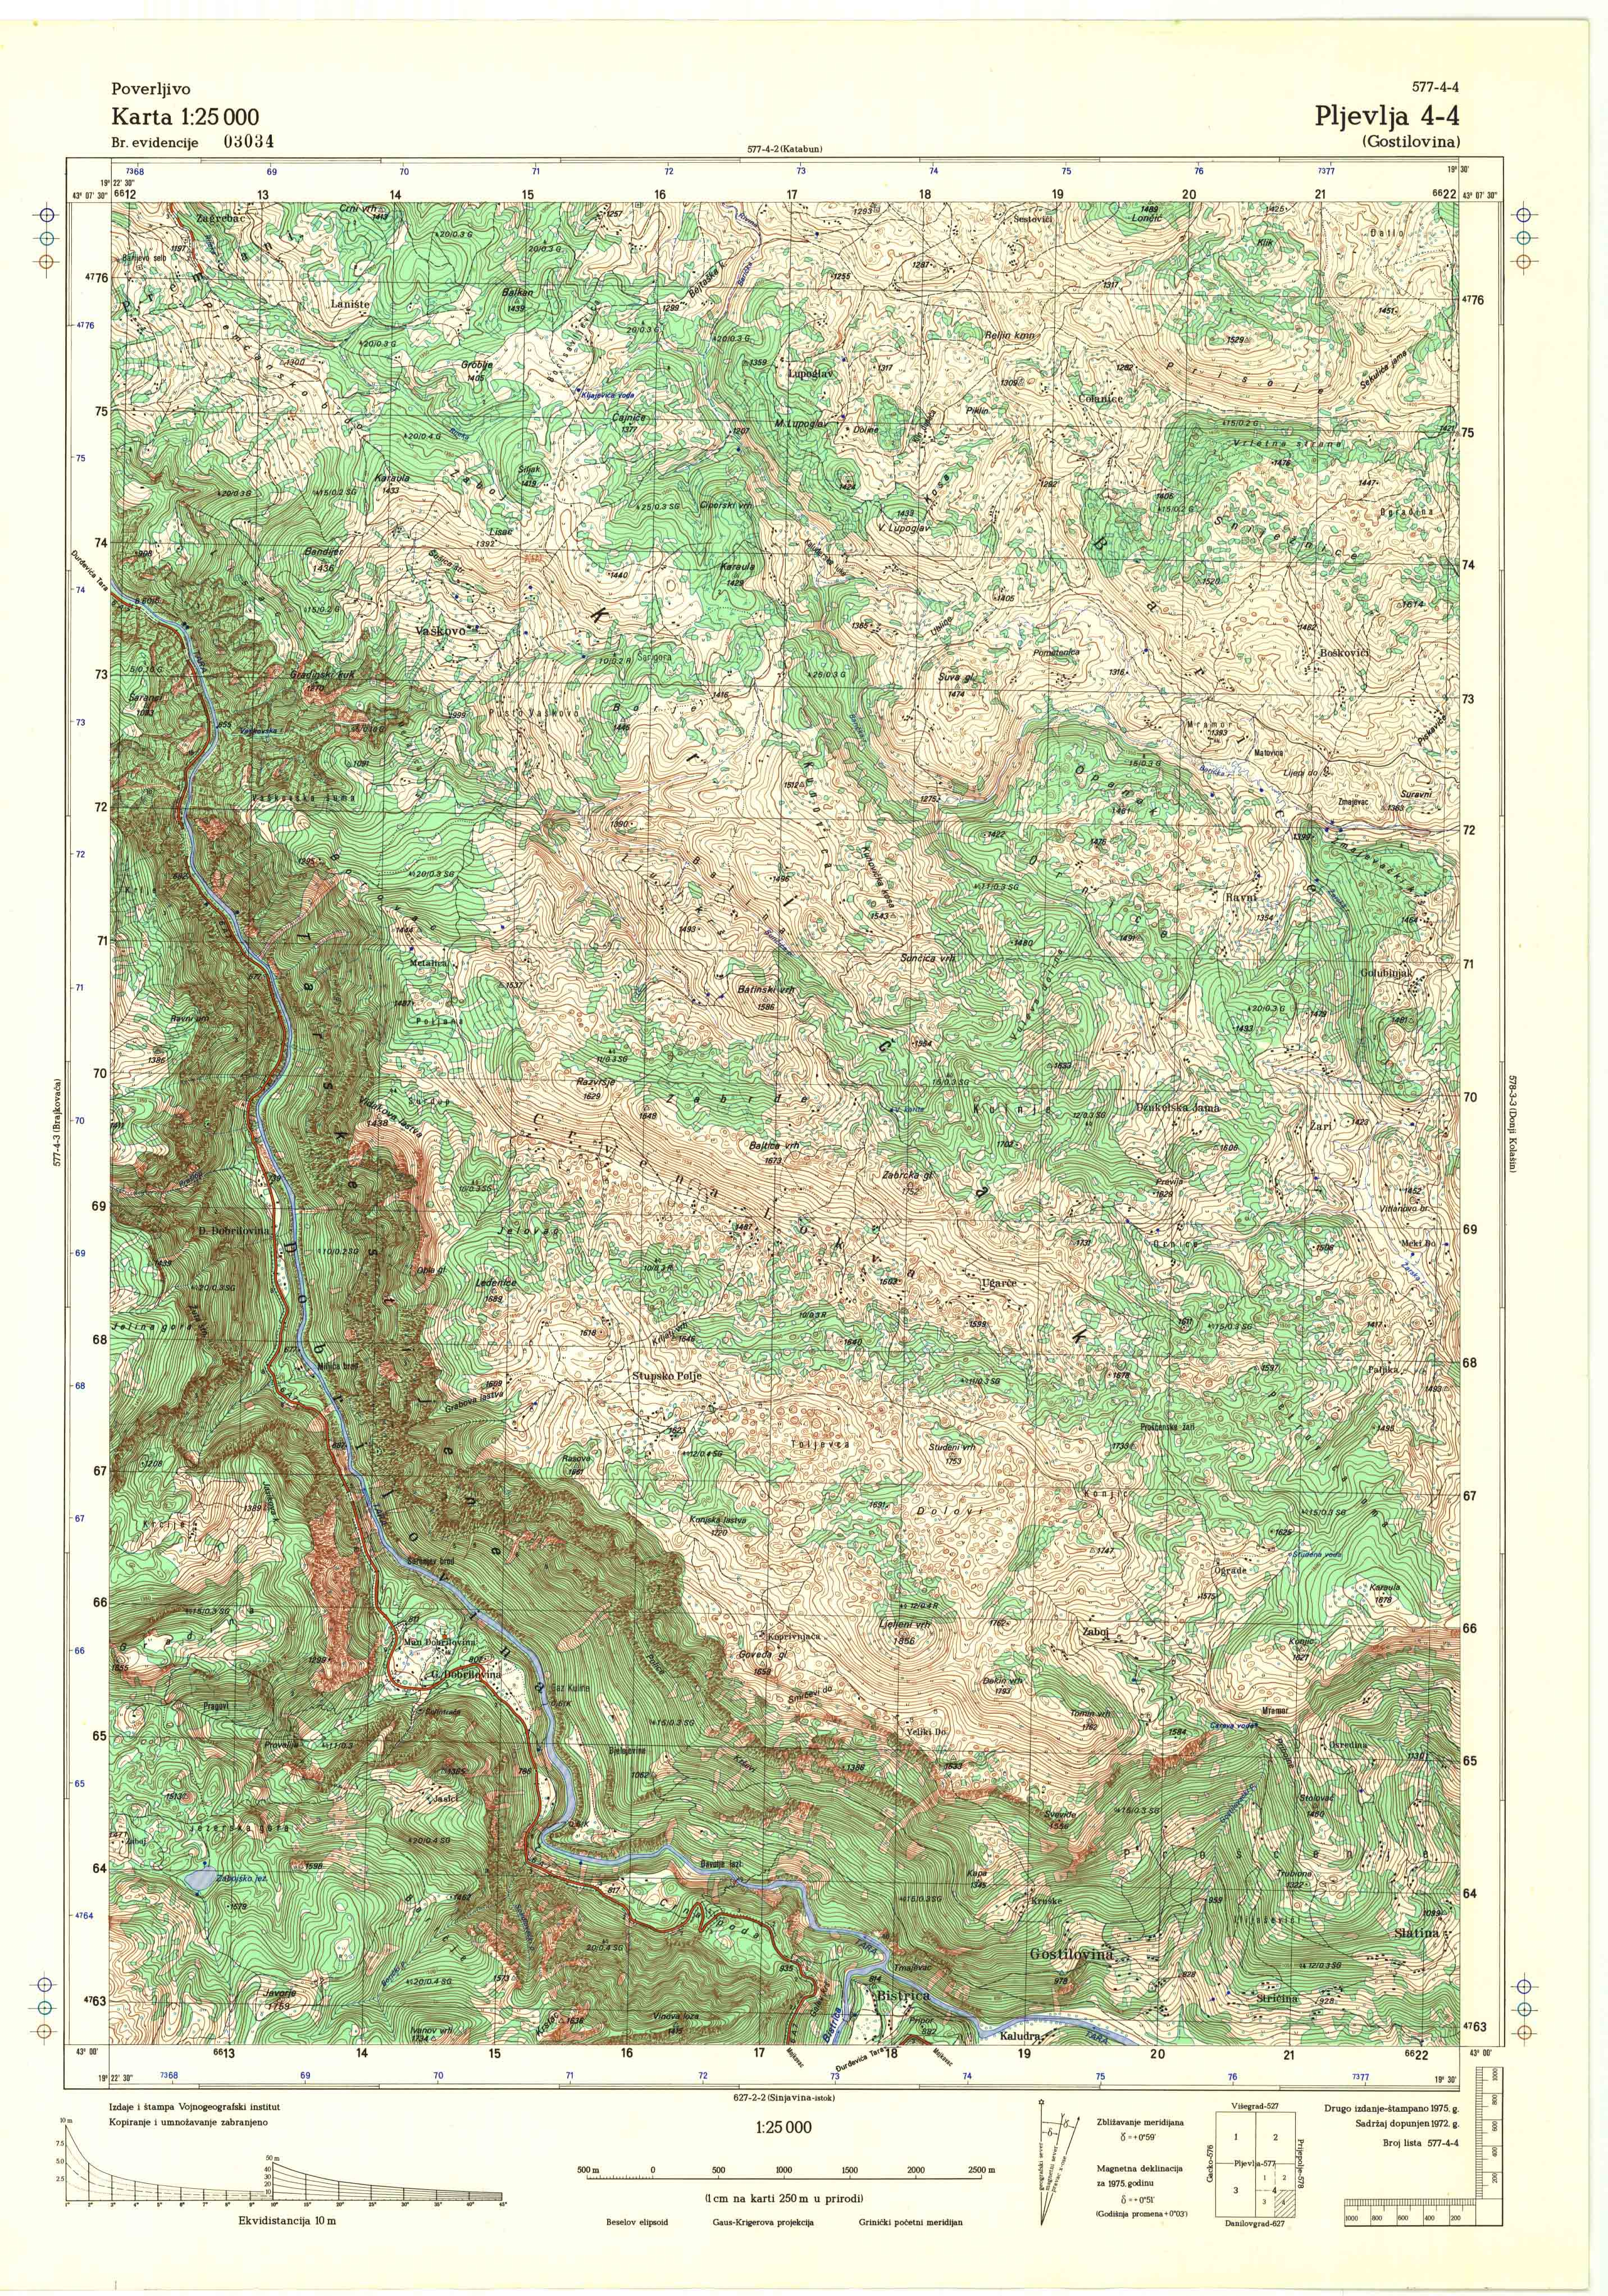  topografska karta srbije 25000 JNA  Pljevlja